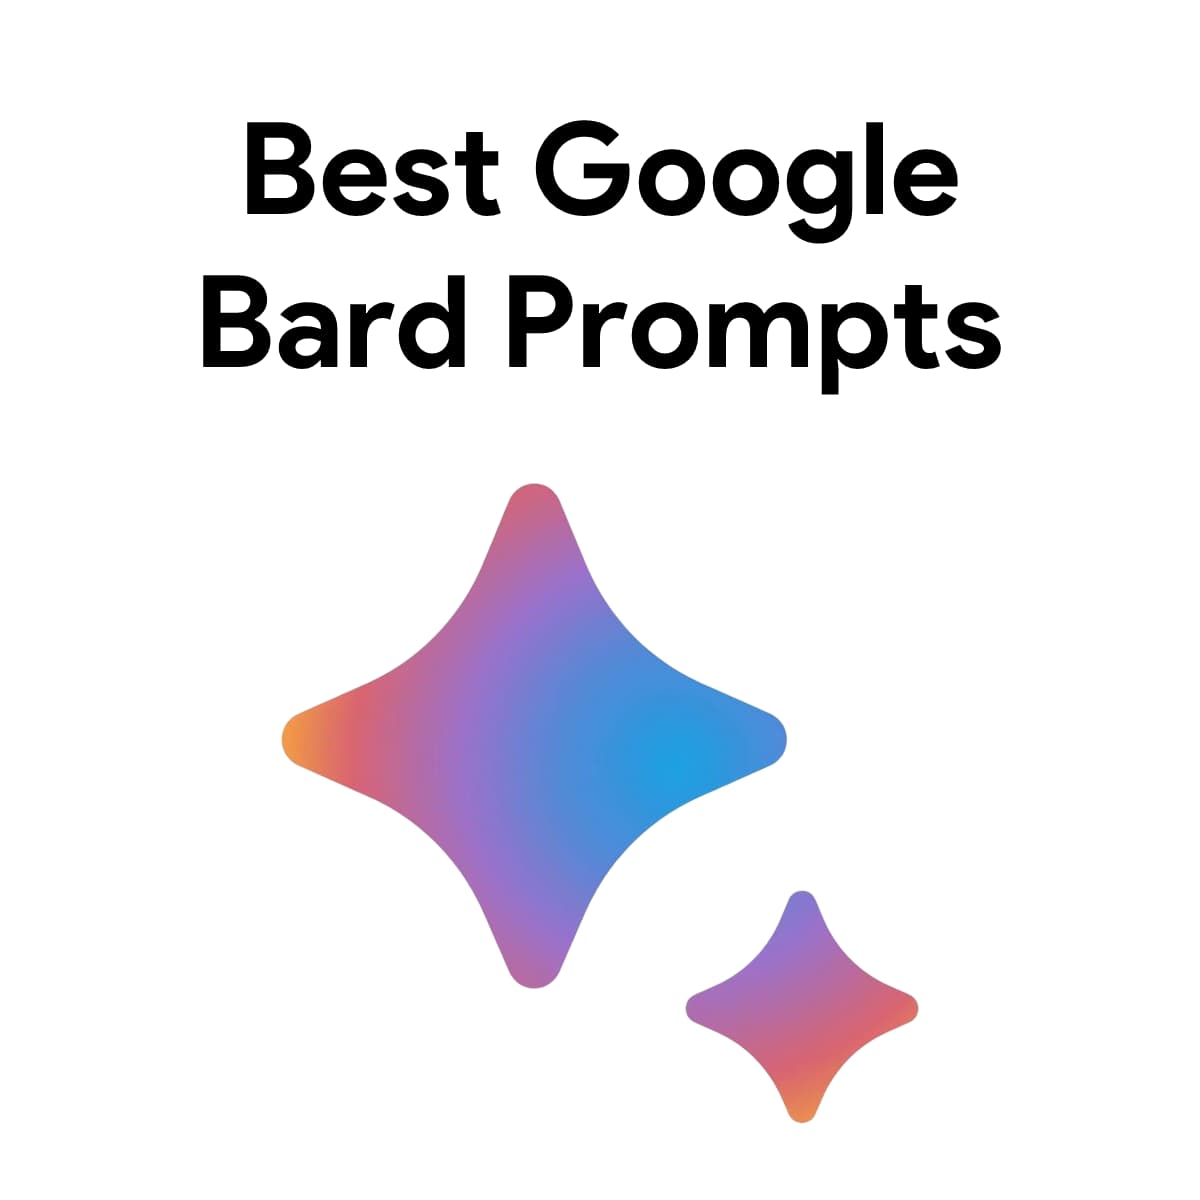 Best Google Bard Prompts